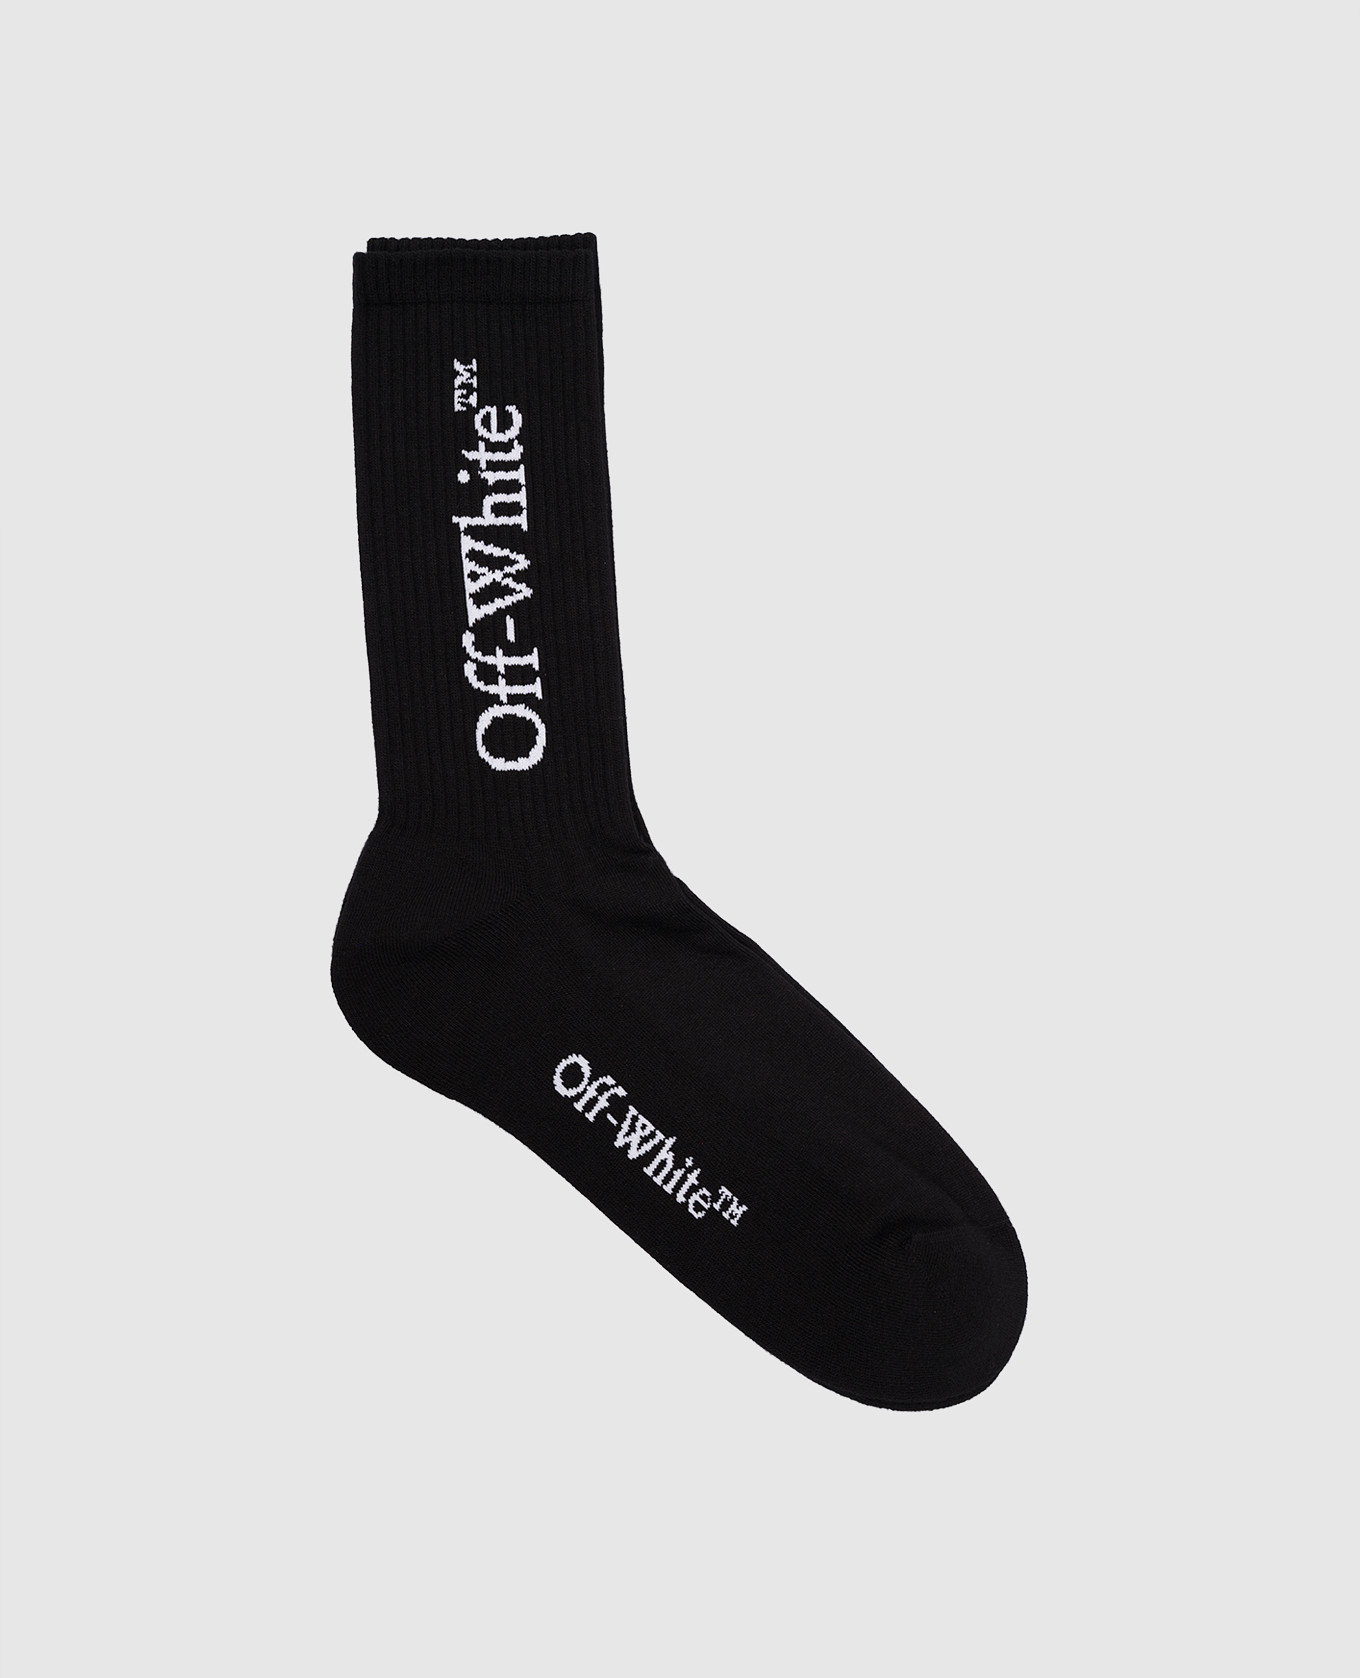 Black socks with contrasting logo pattern